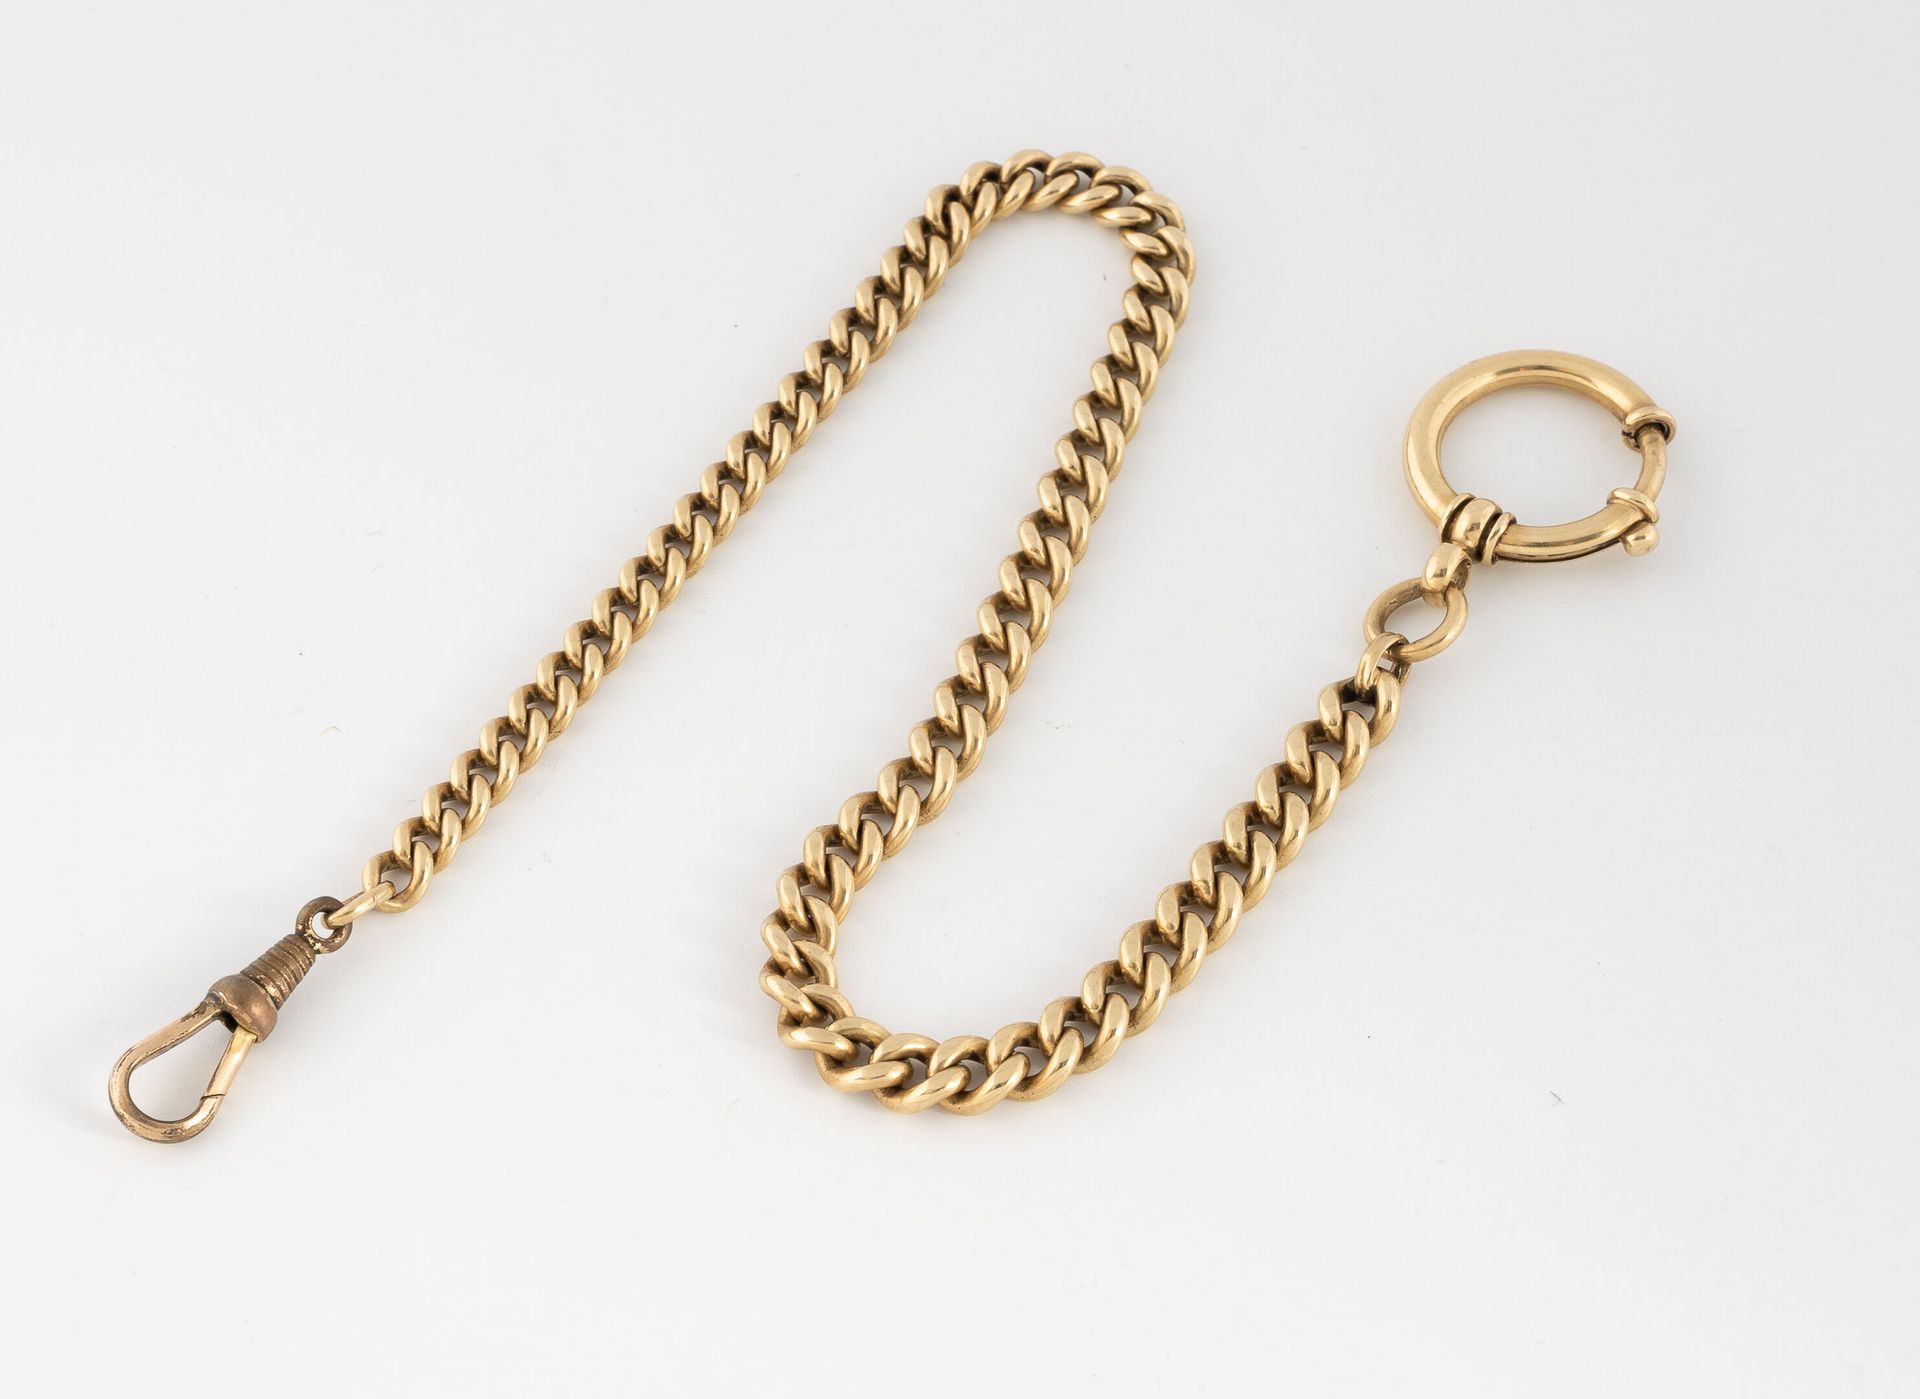 Null 黄金(585)表链，带路牙链。
长24厘米 - 重量：26.7克。
有划痕。